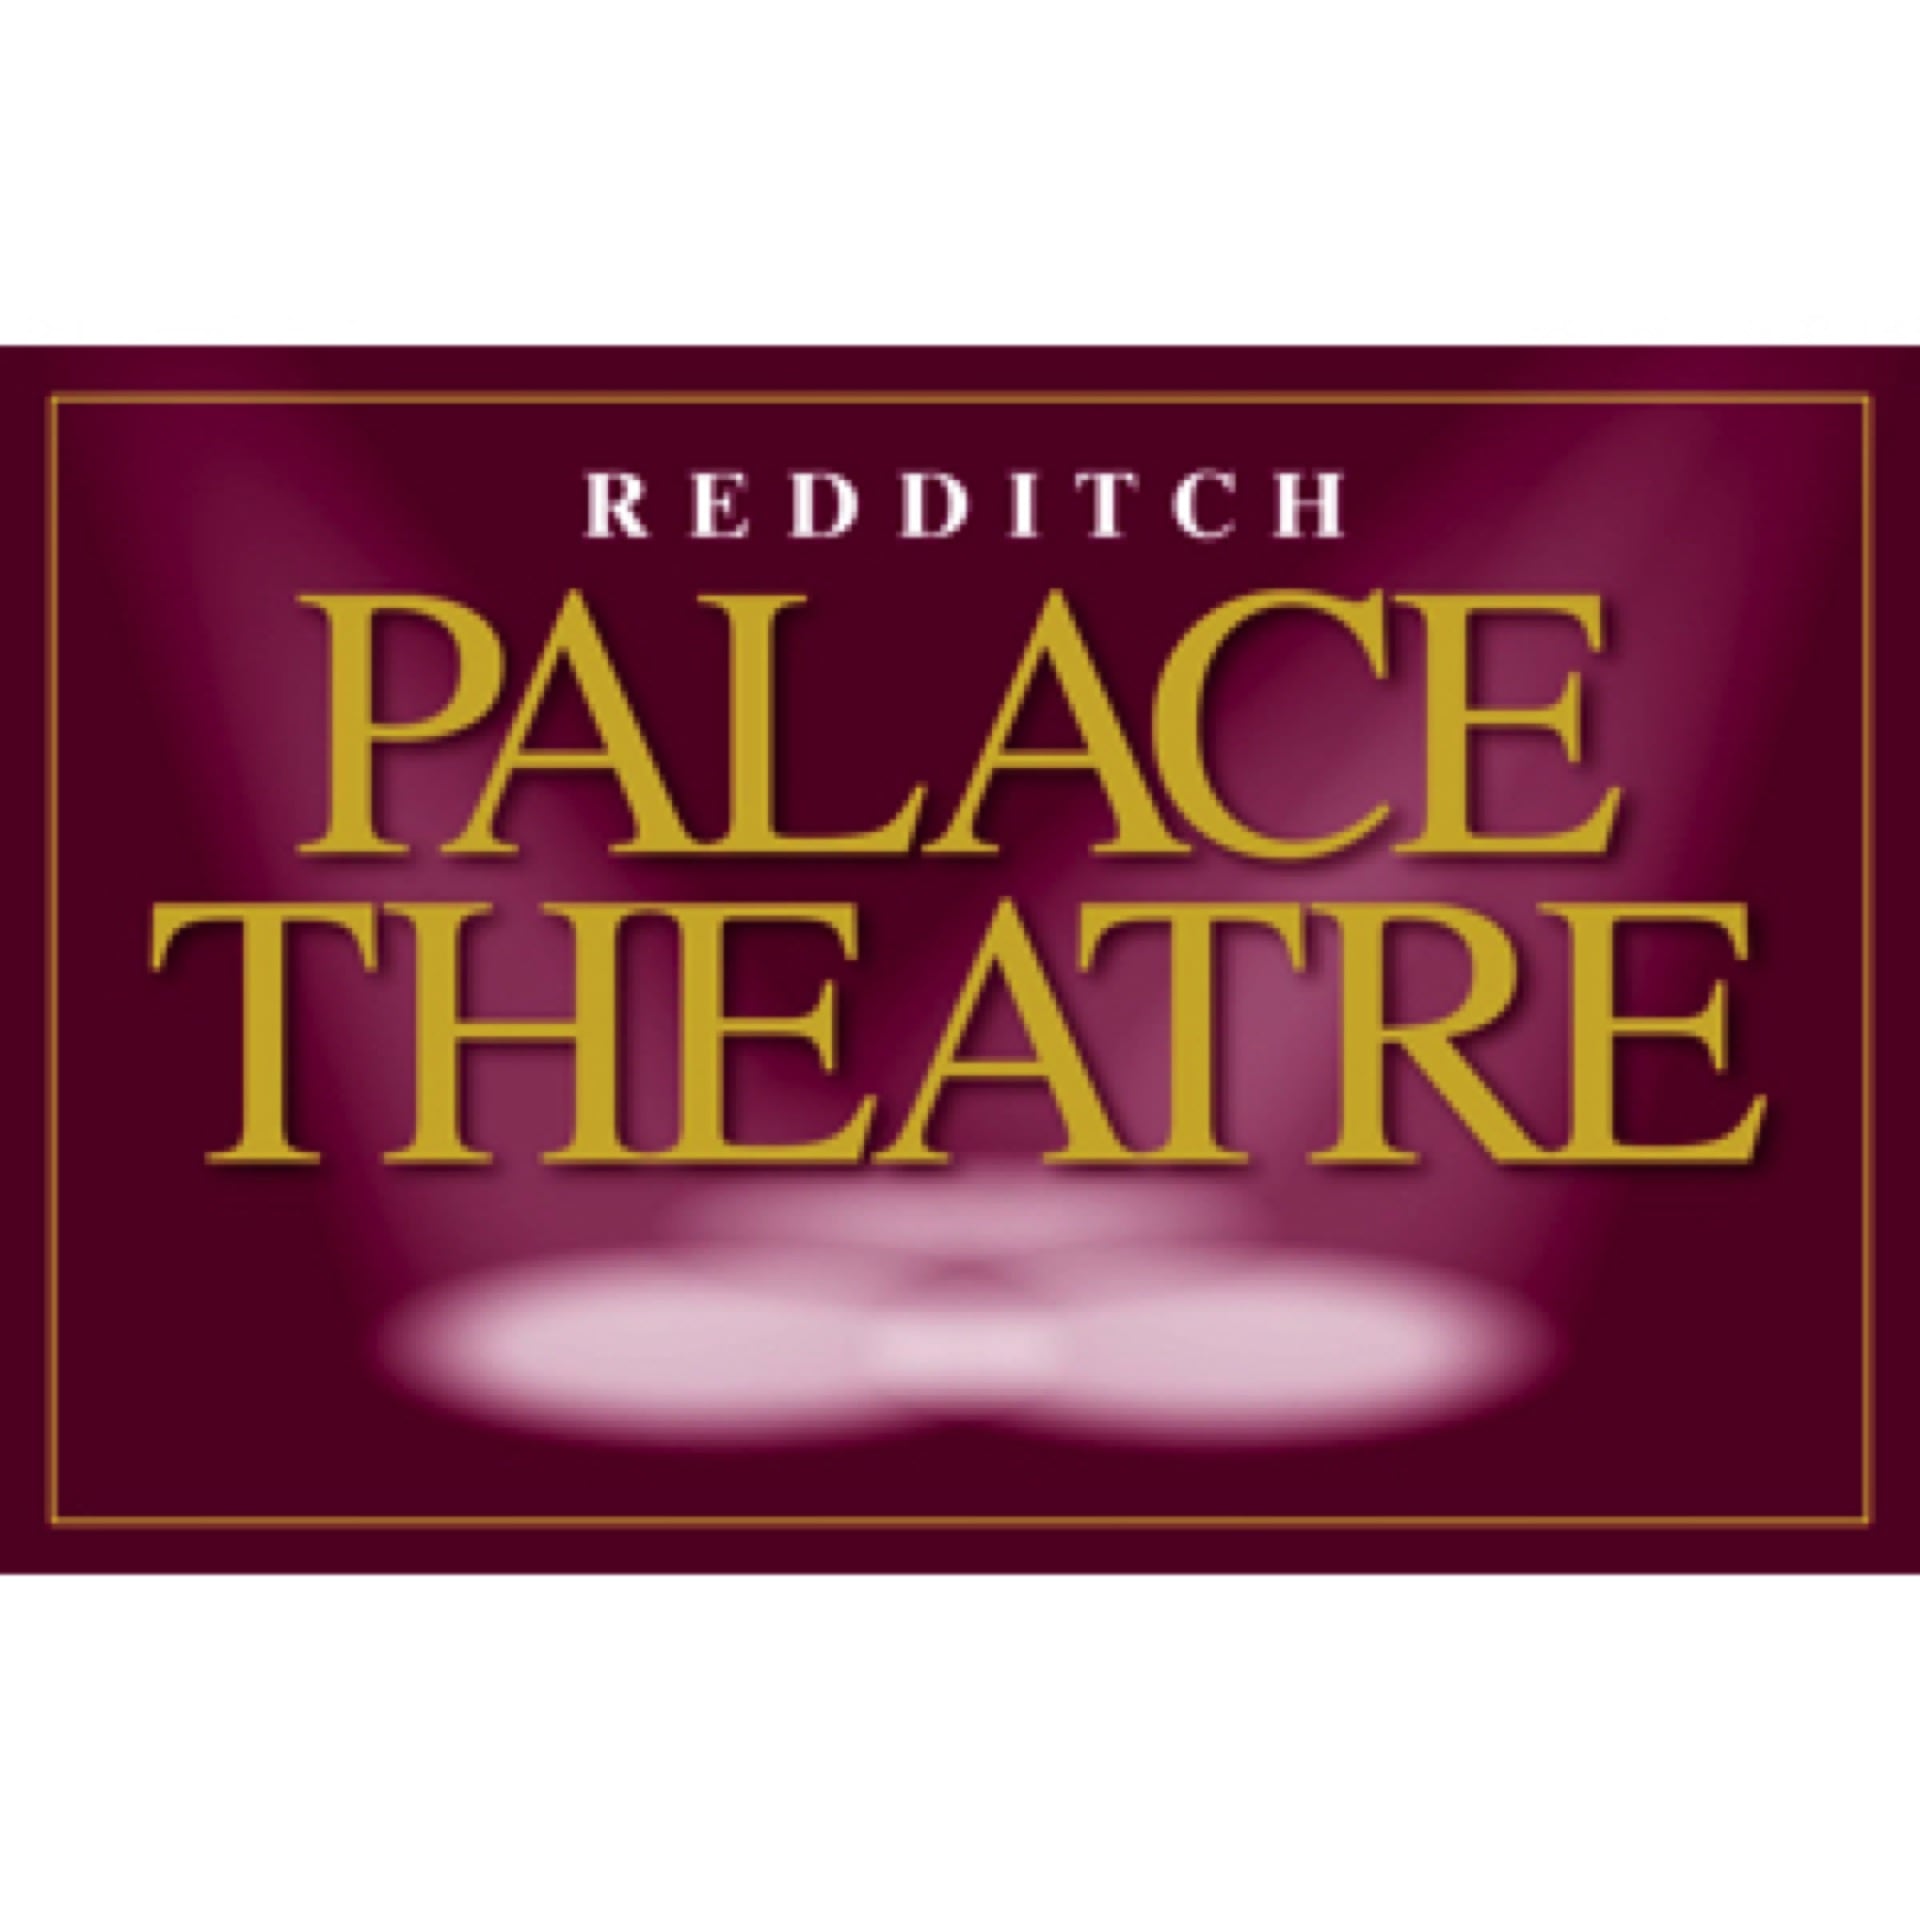 Redditch Palace Theatre